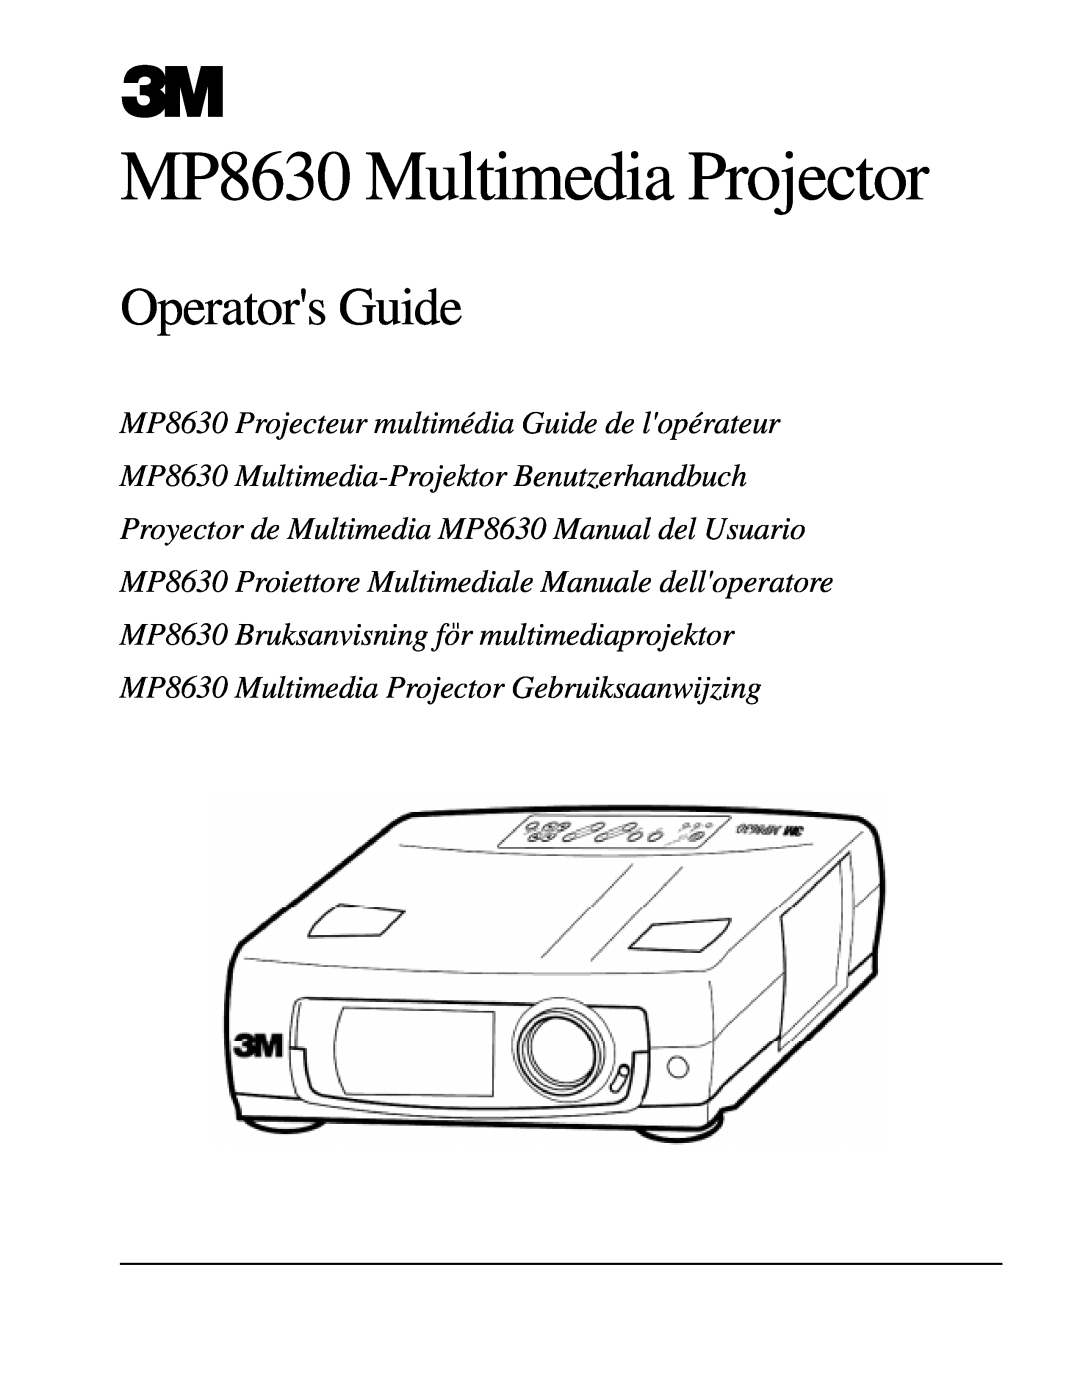 3M manual MP8630 Multimedia Projector, Operators Guide 